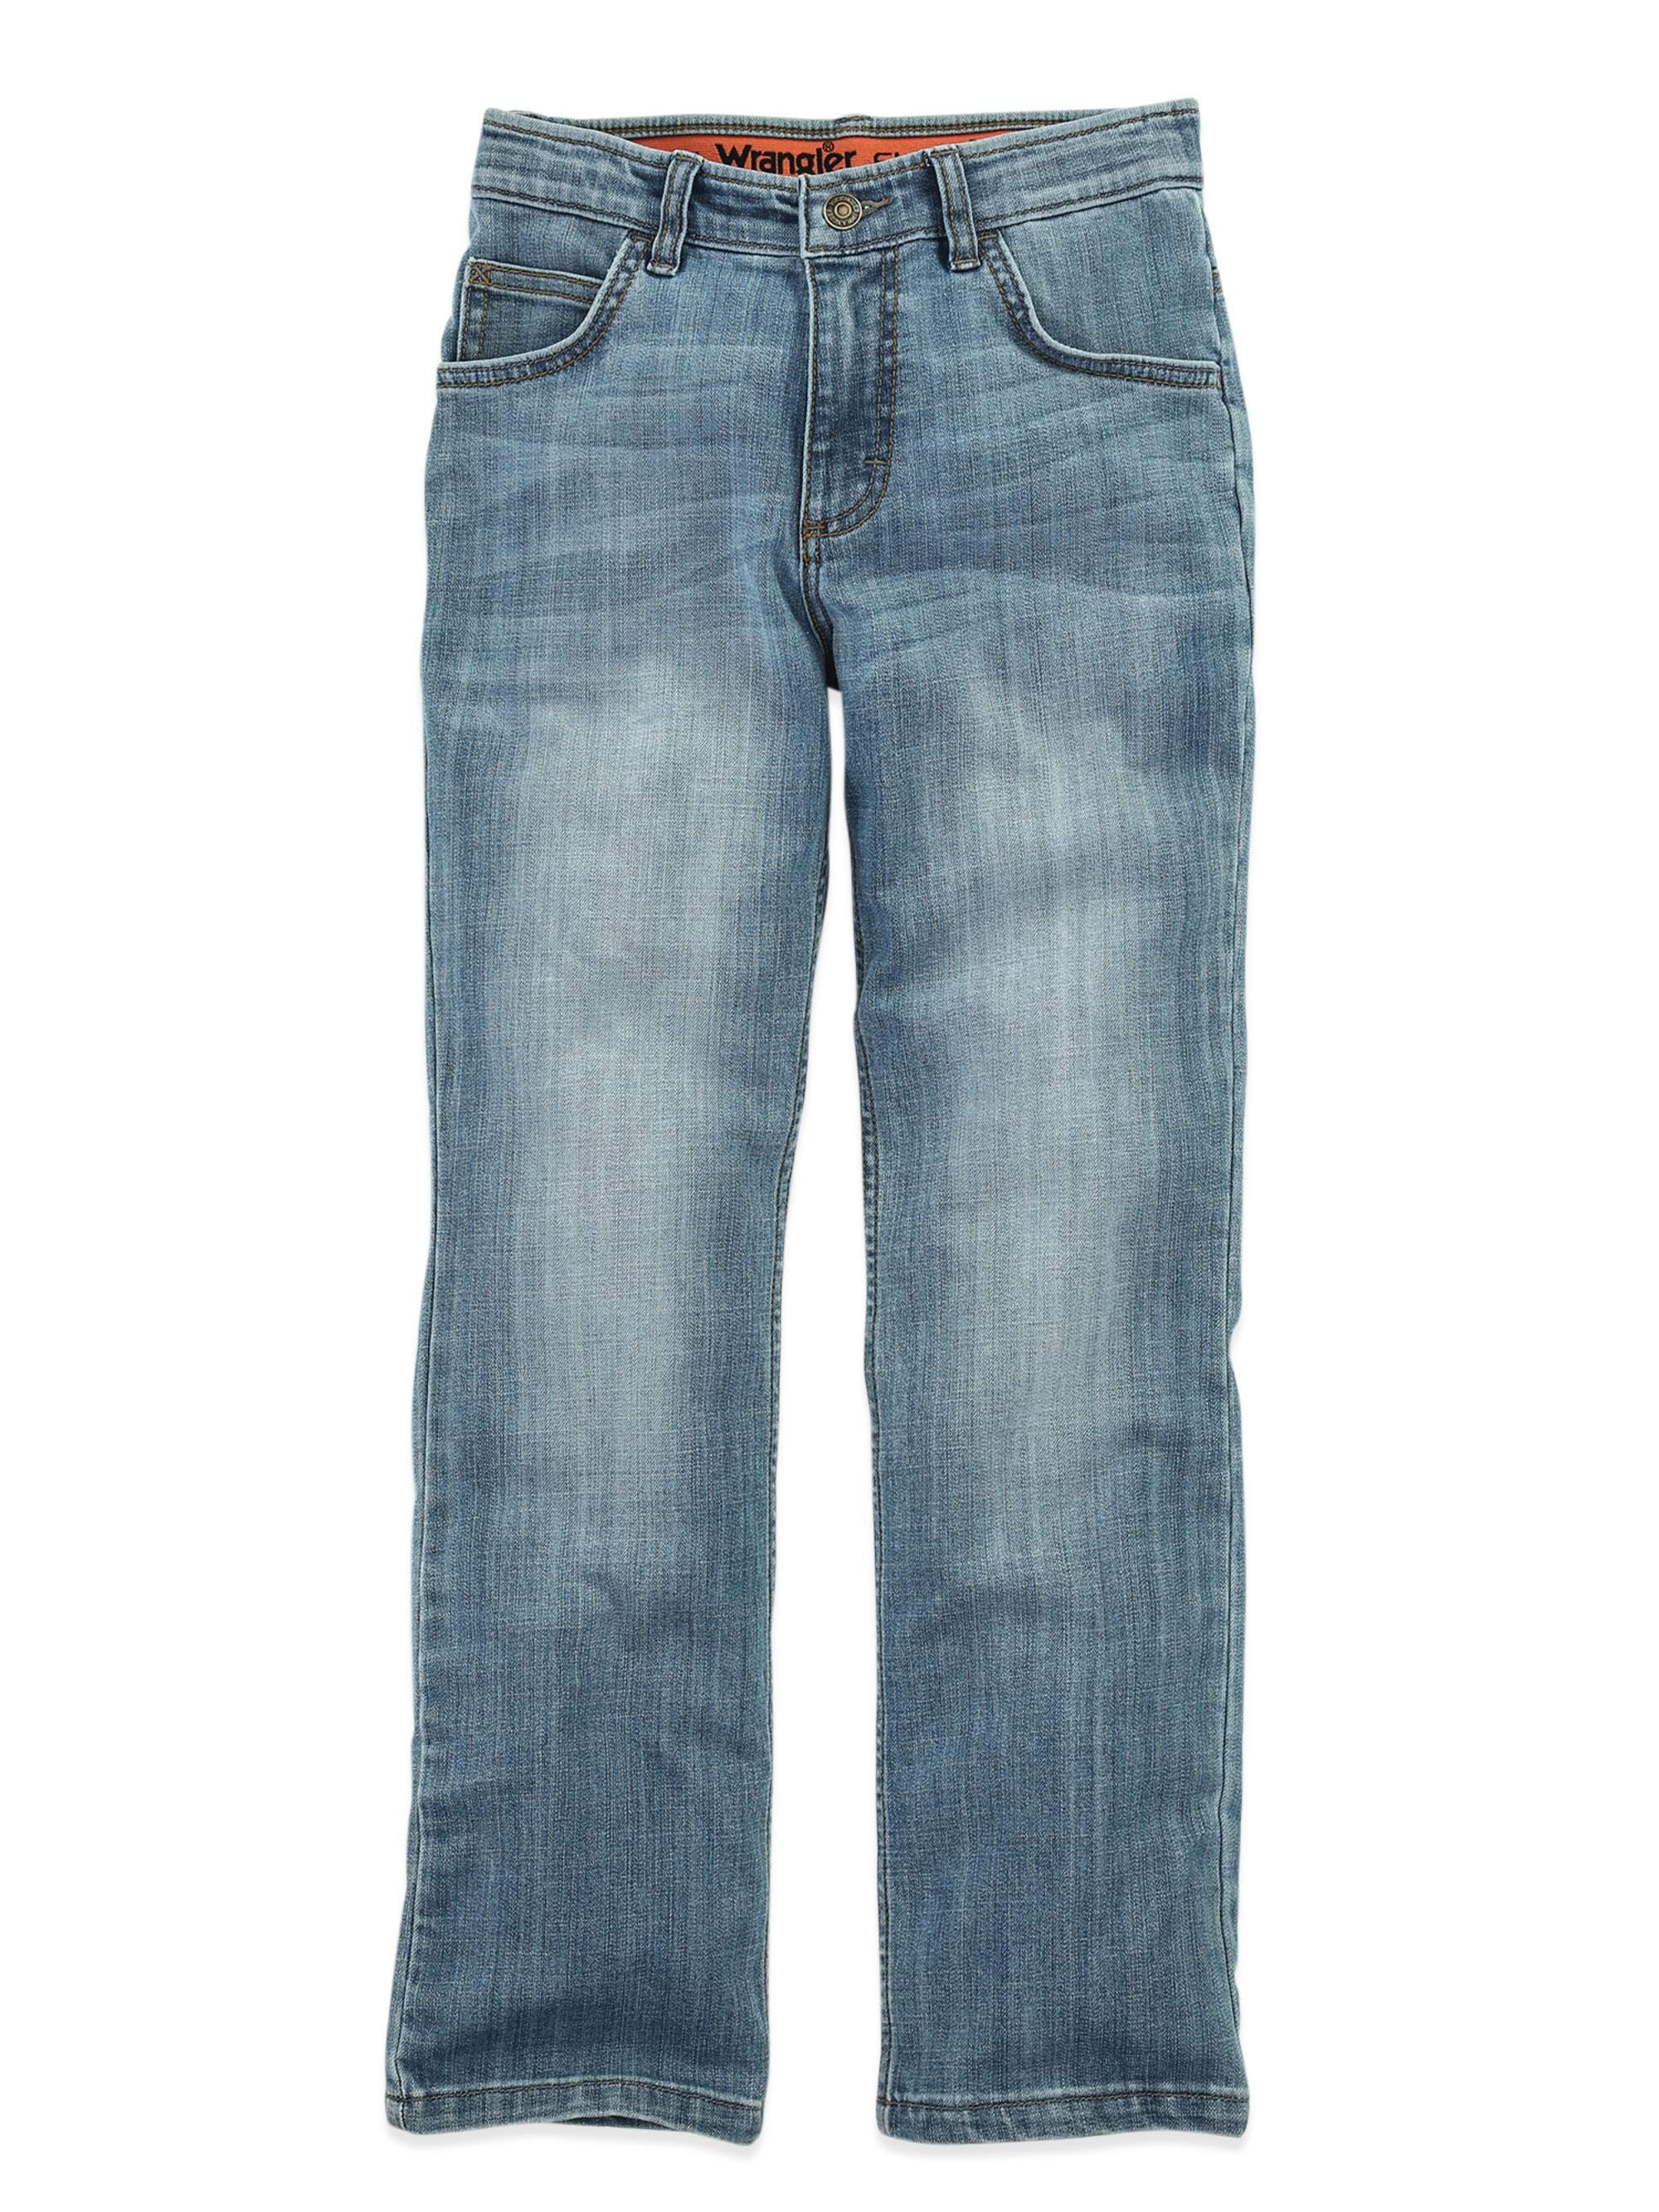 walmart wrangler 4 way flex jeans